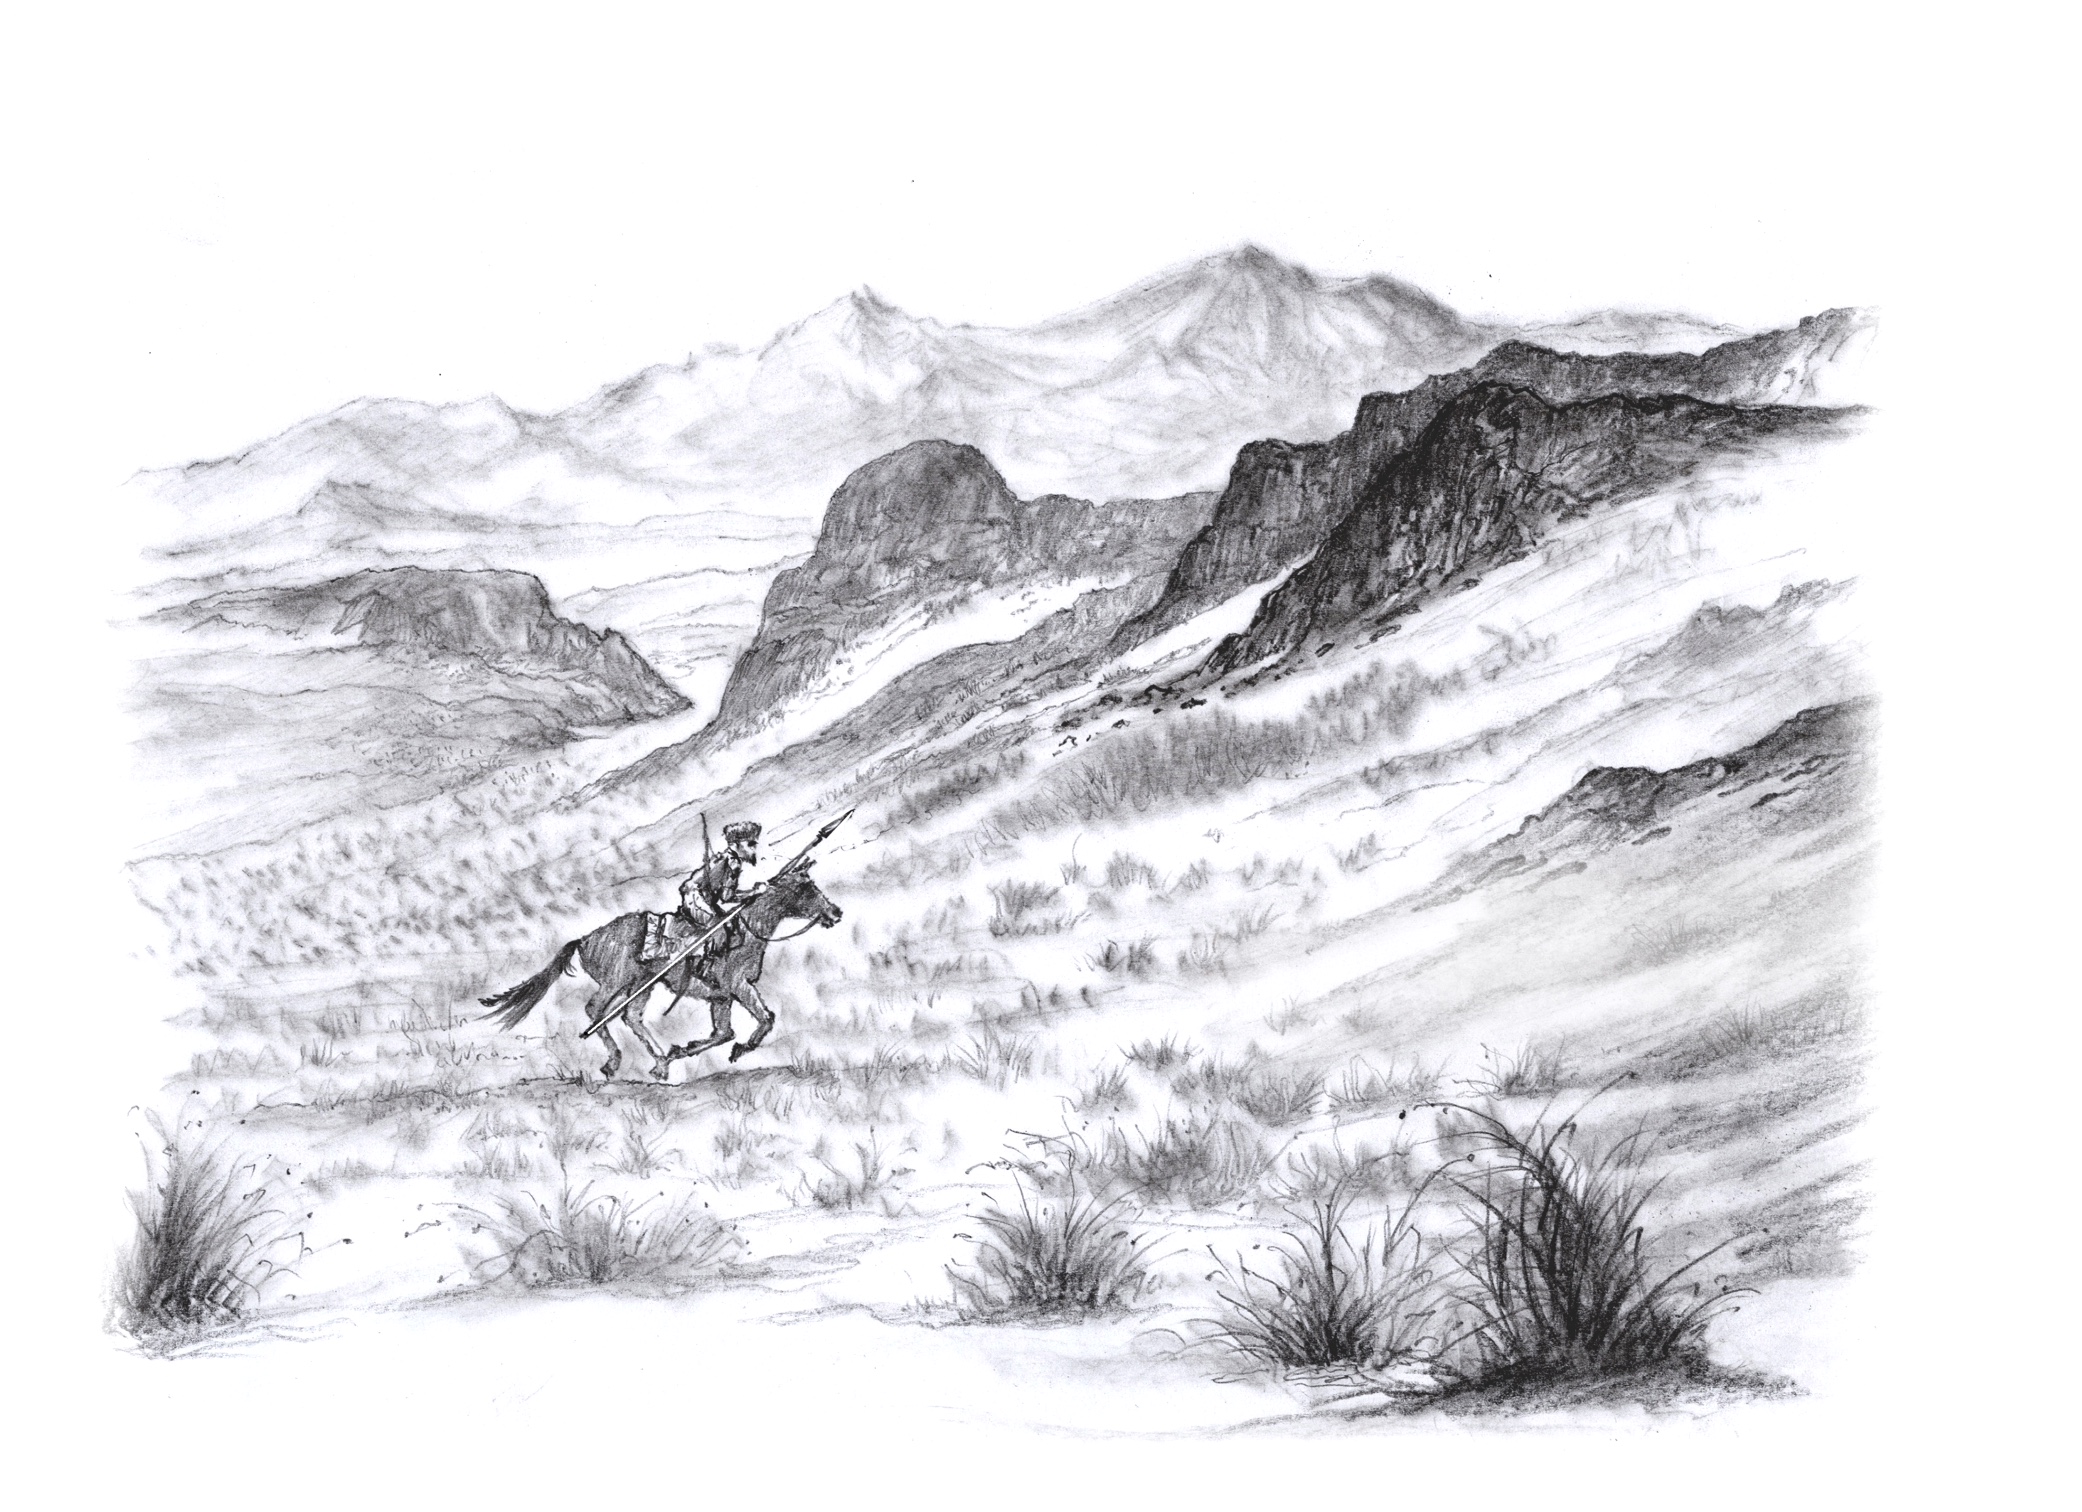 Rorshai Rider by Roger Garland